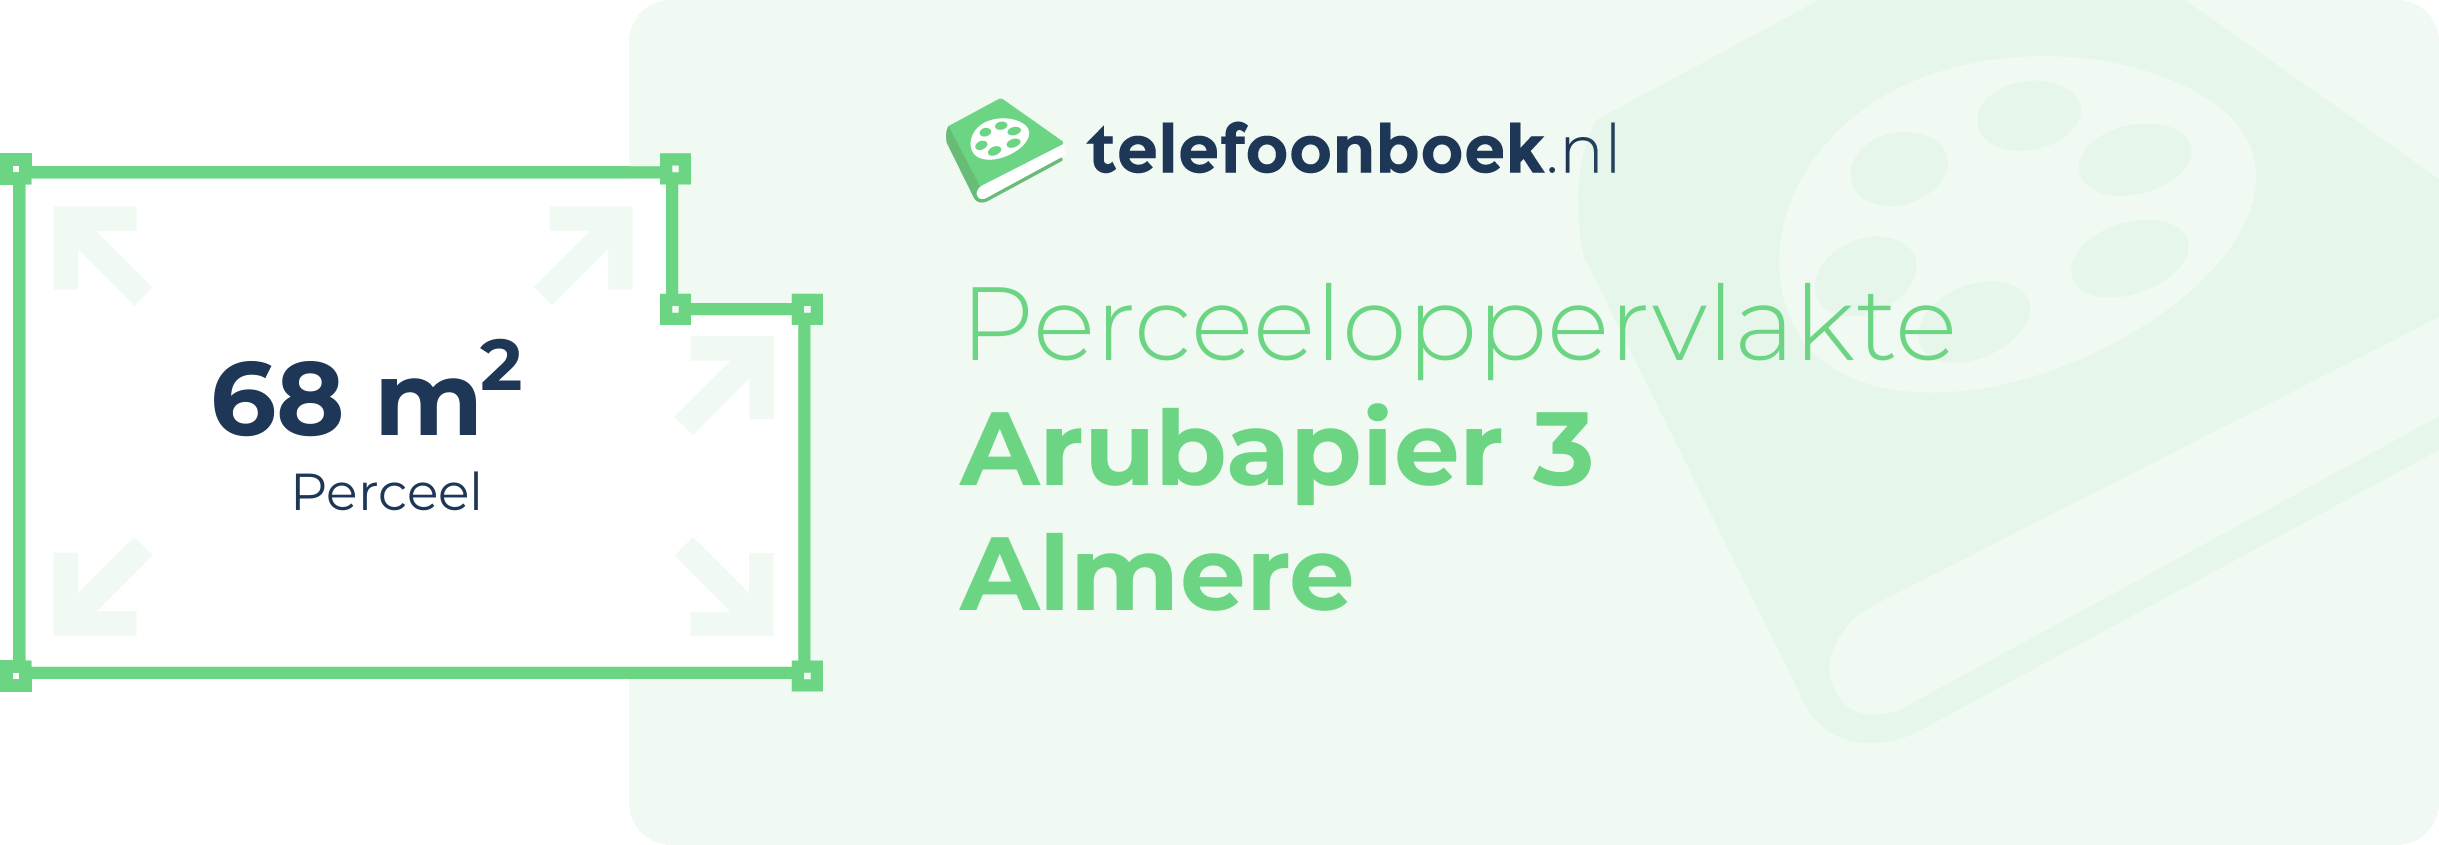 Perceeloppervlakte Arubapier 3 Almere